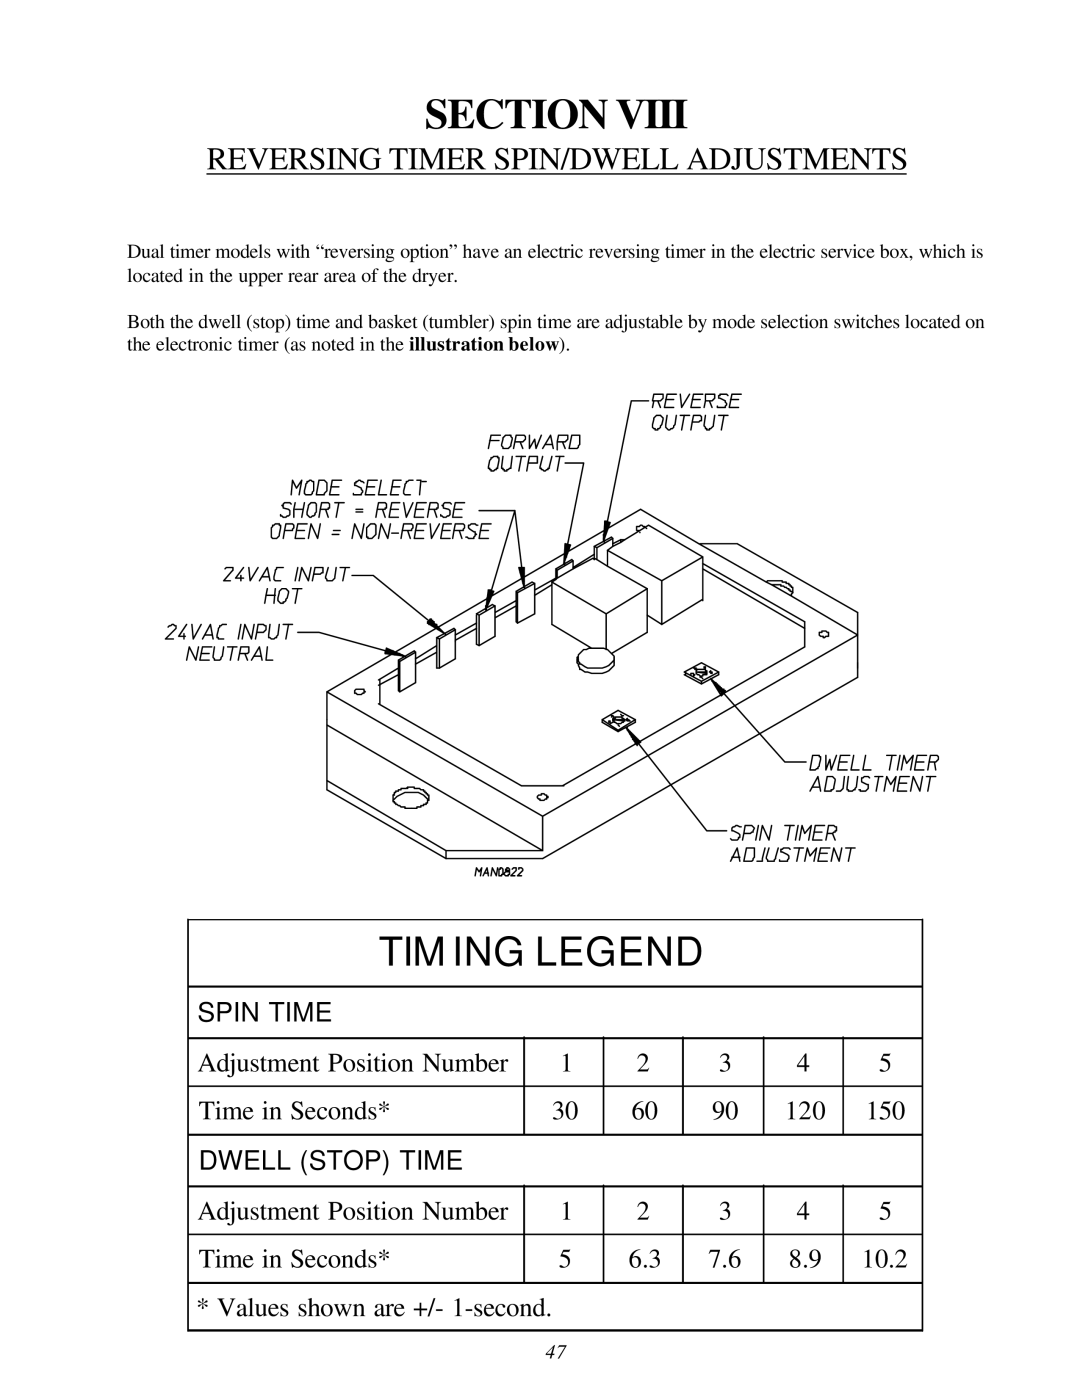 American Dryer Corp D-40 installation manual TIM ING Legend, Reversing Timer SPIN/DWELL Adjustments 